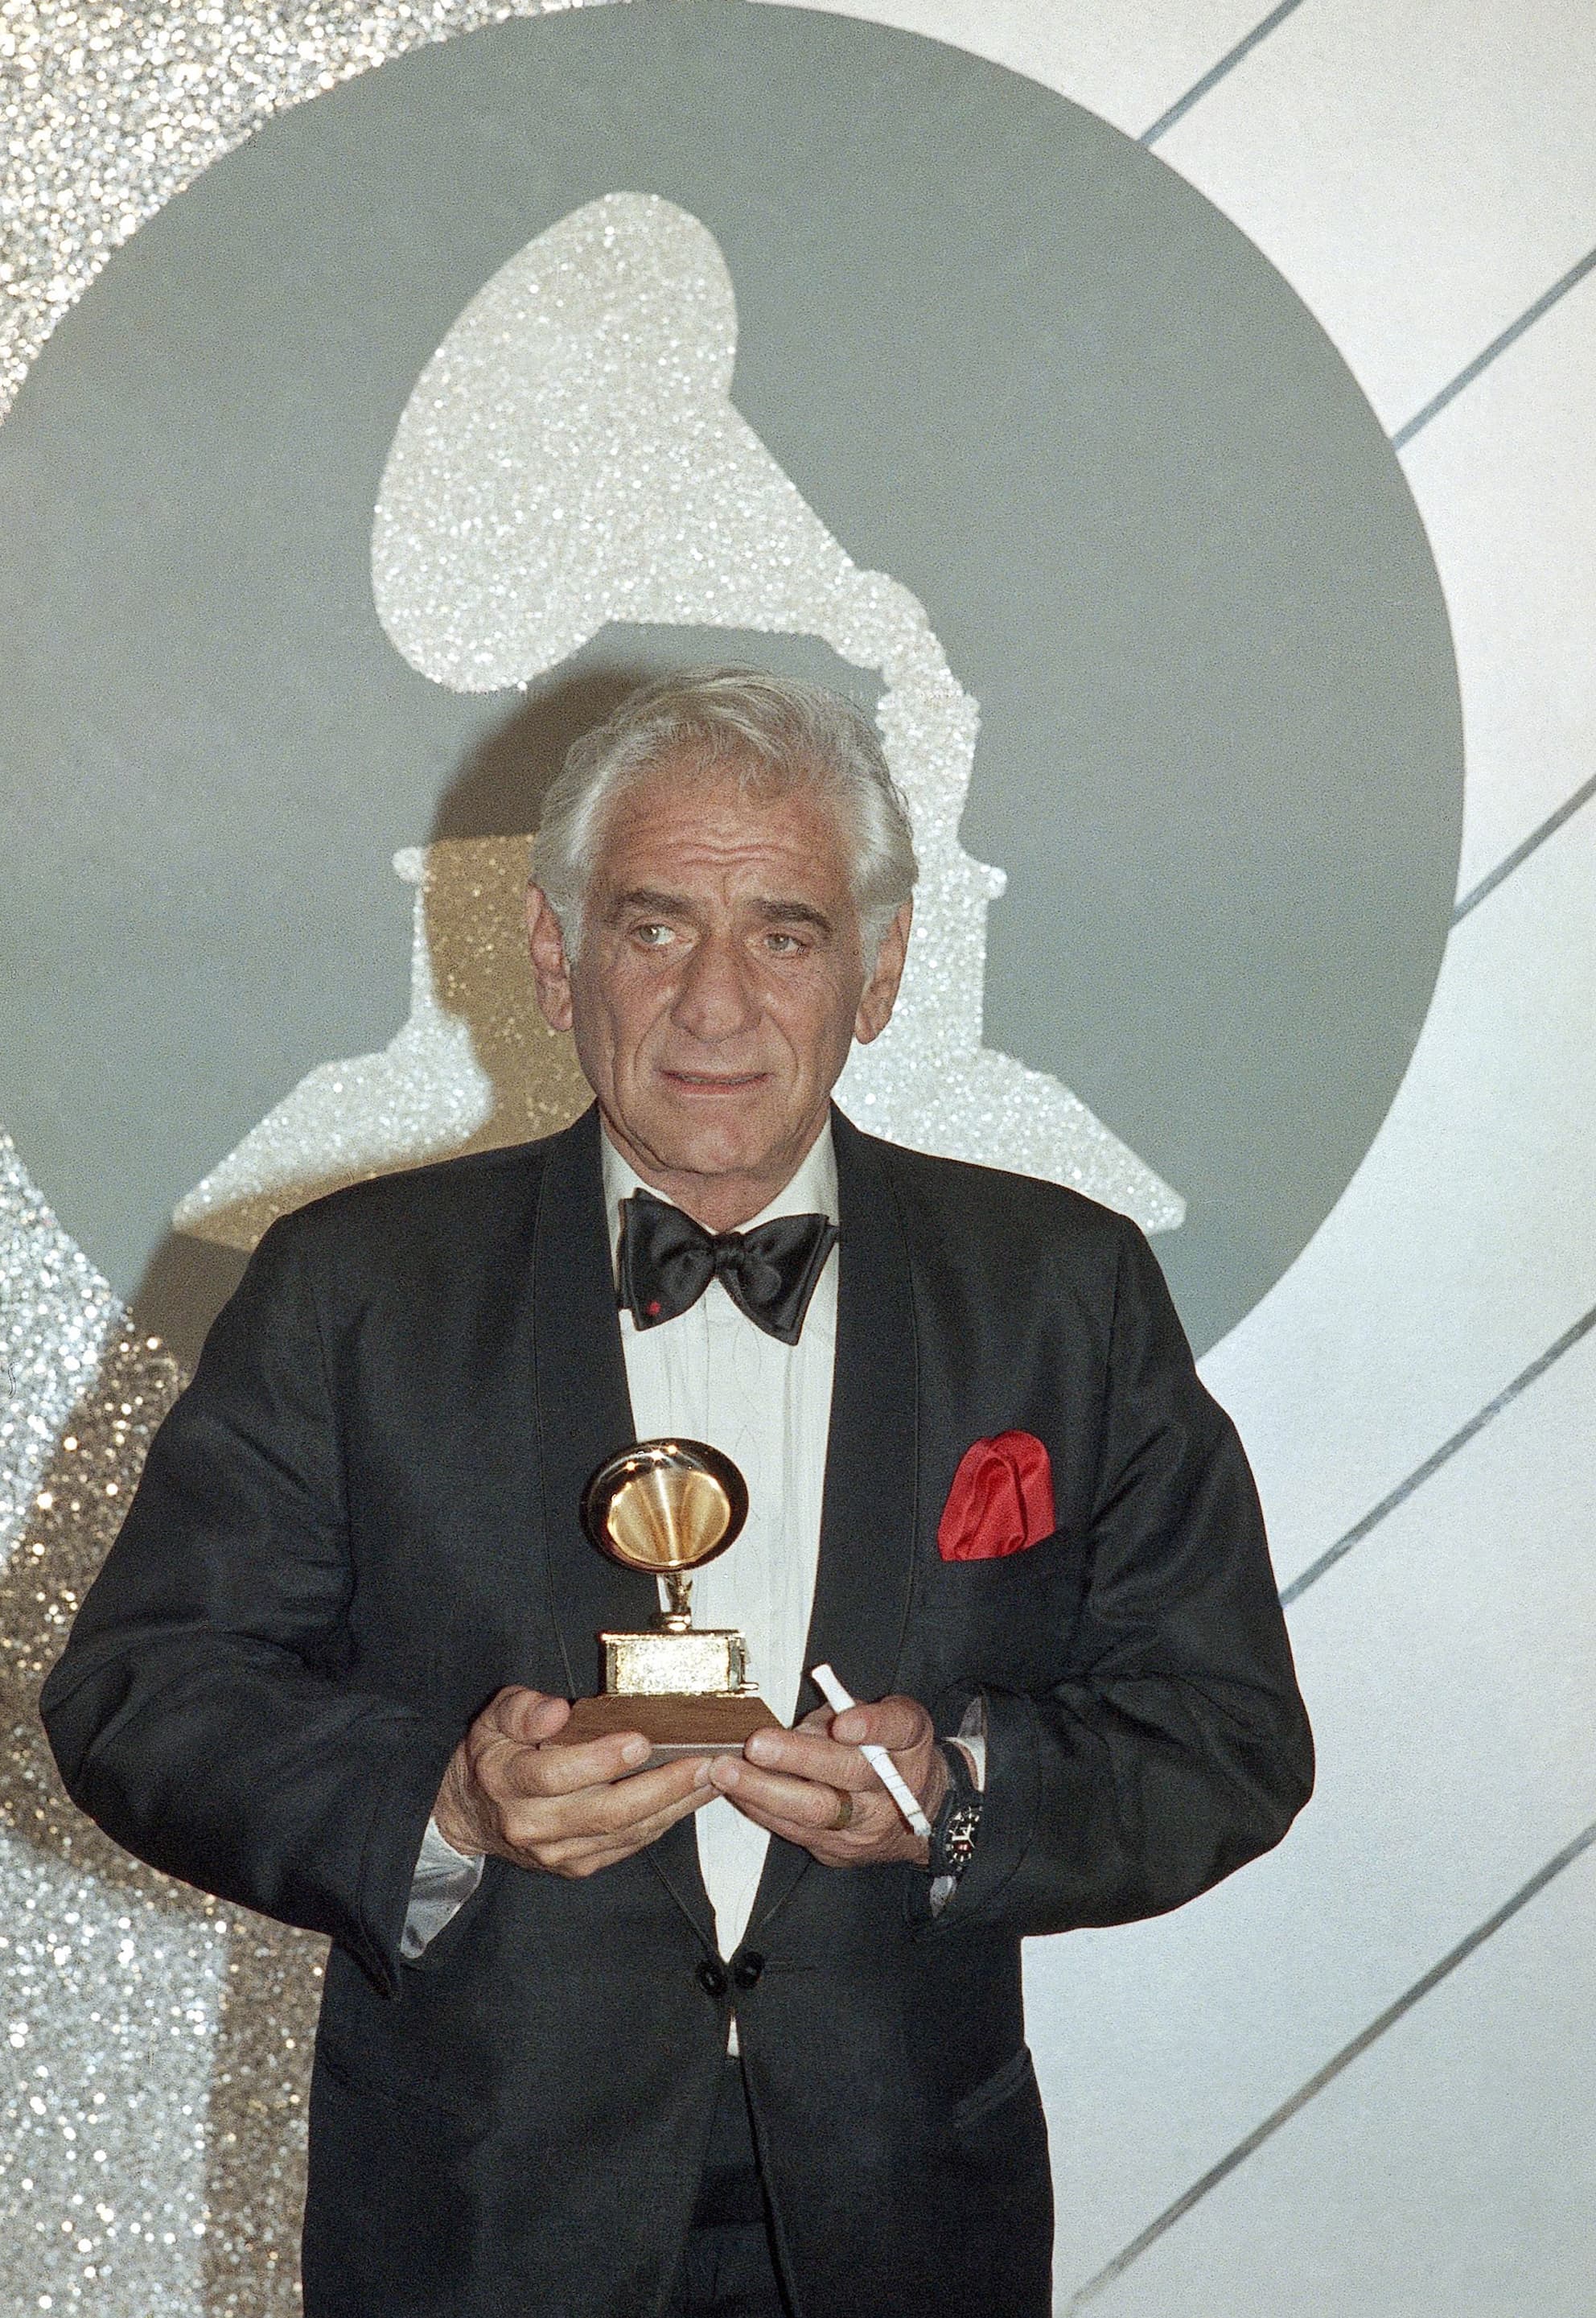 Leonard Bernstein's Centennial Proves His Greatness As A Composer